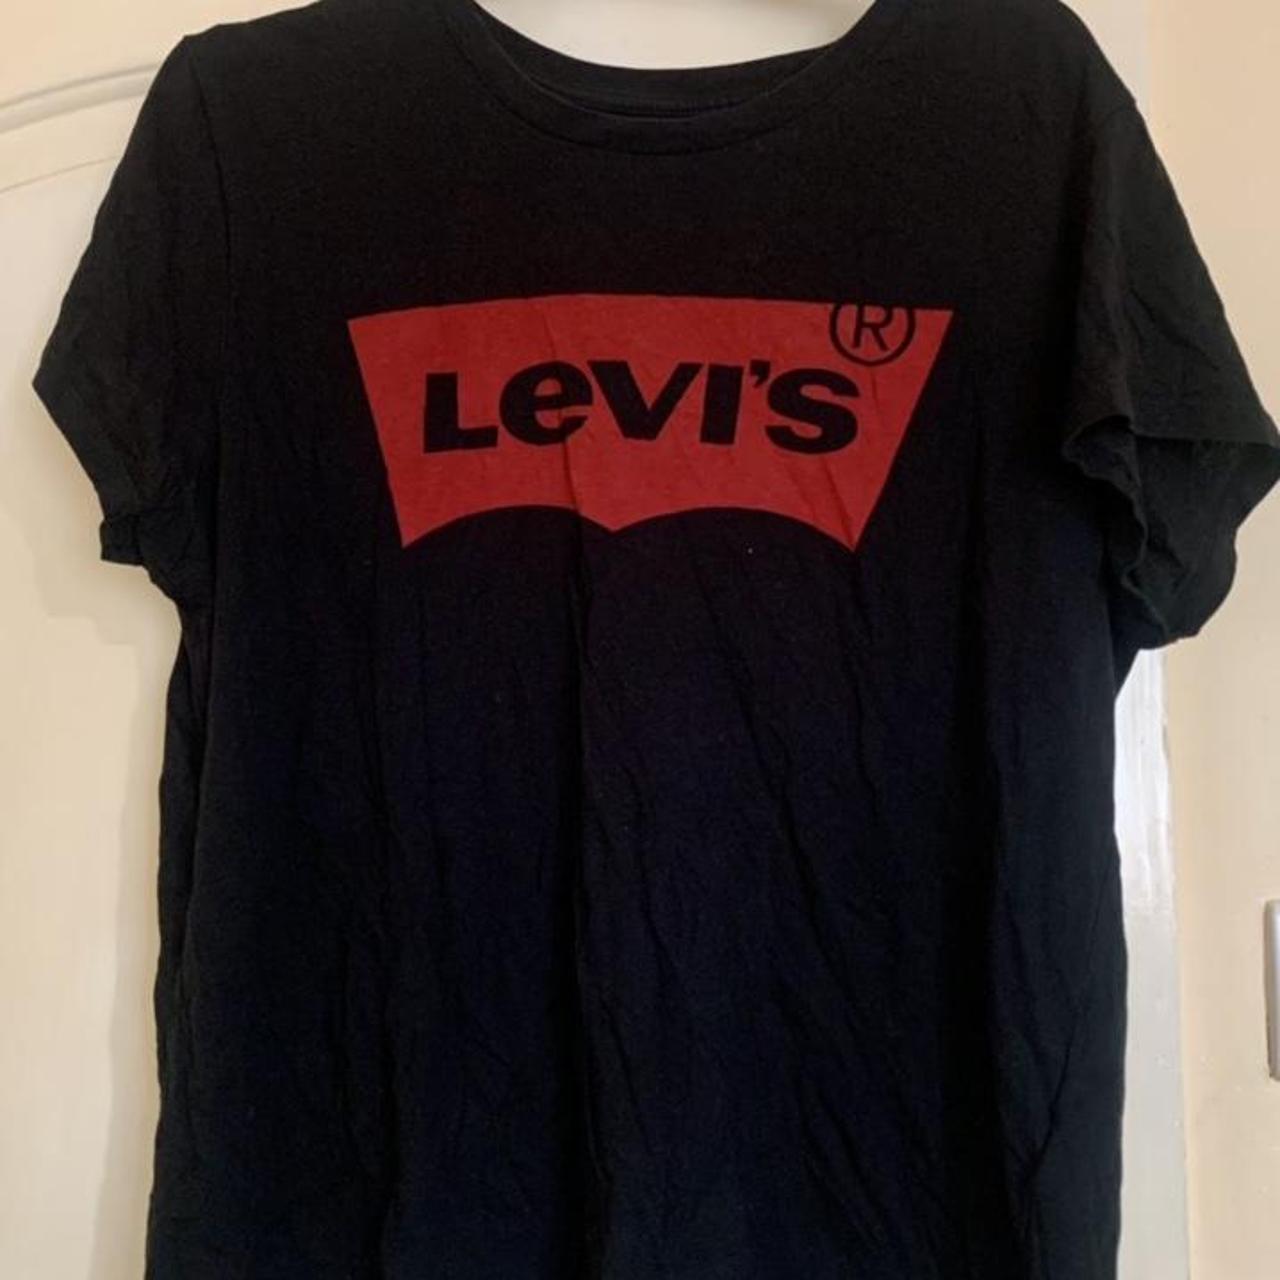 Levi’s XL T-shirt, worn but like new #levis #tshirt... - Depop